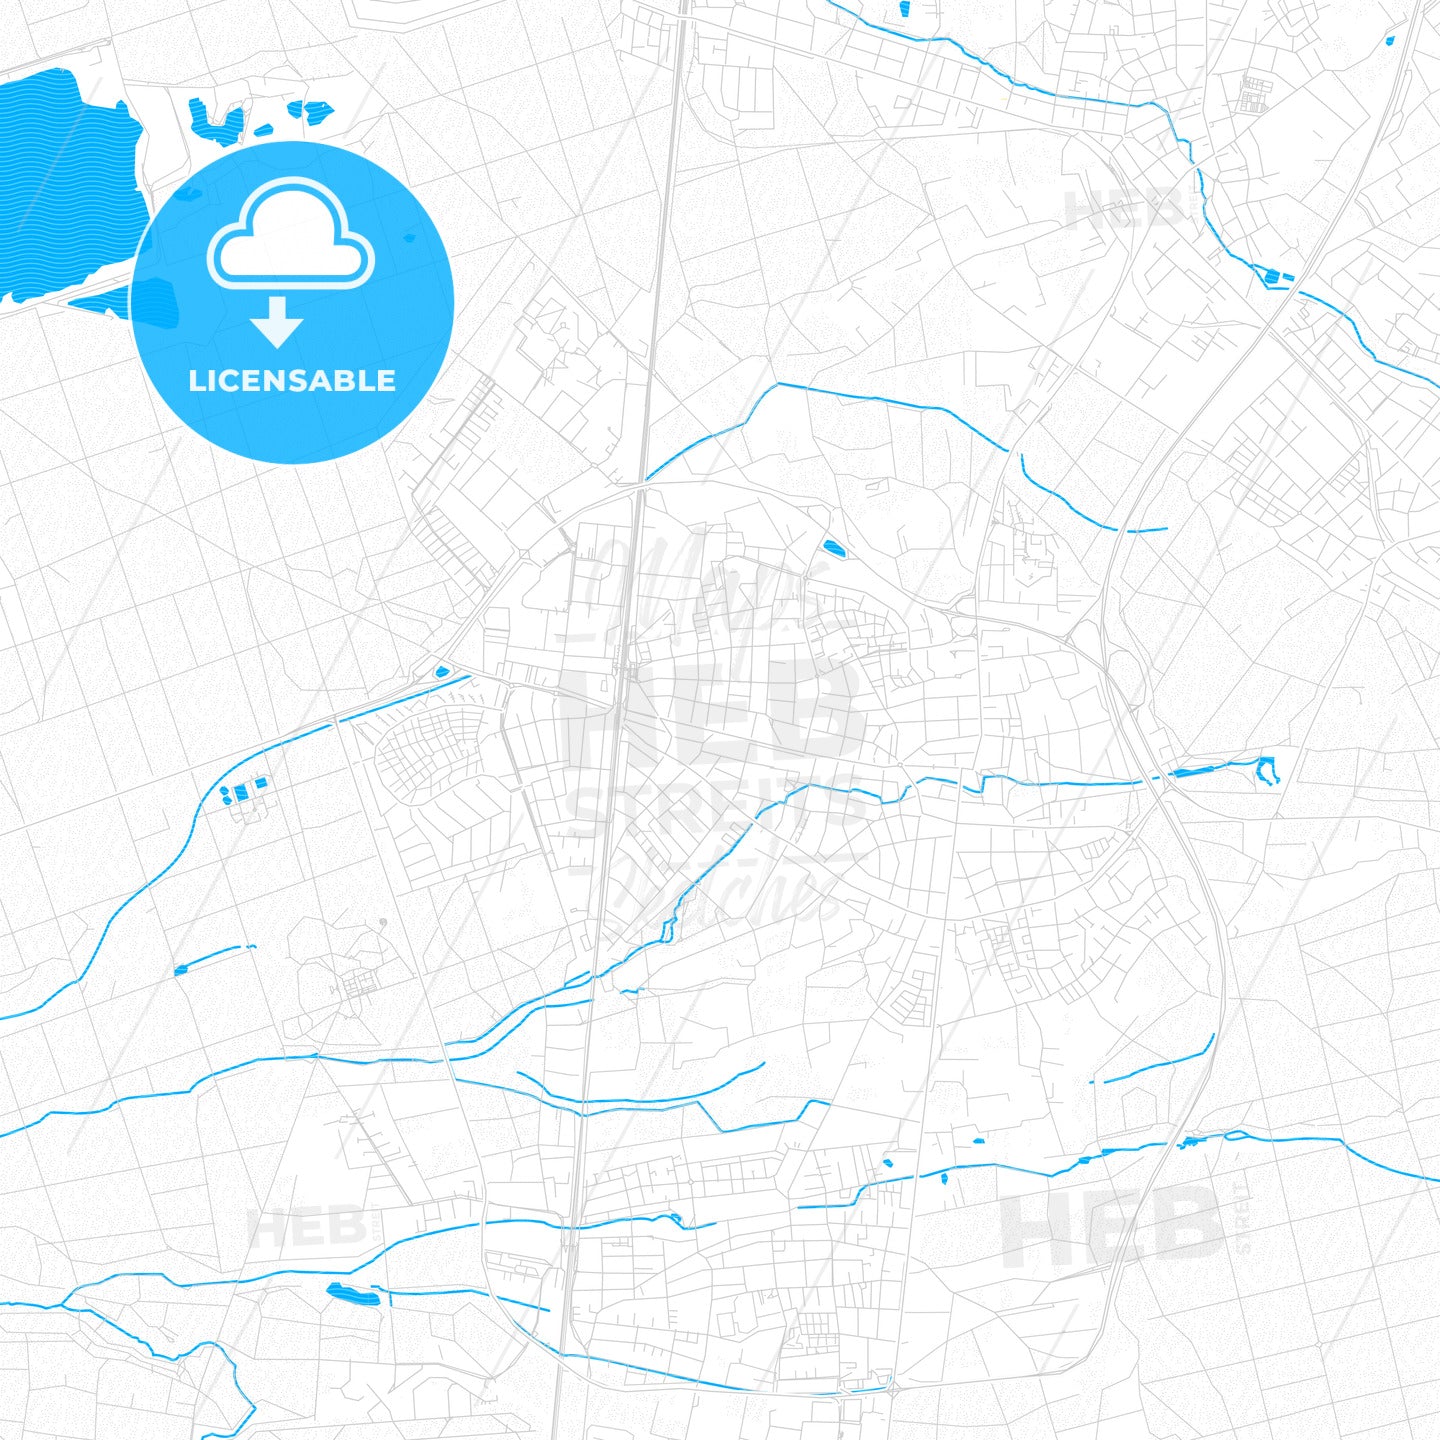 Langen, Germany PDF vector map with water in focus